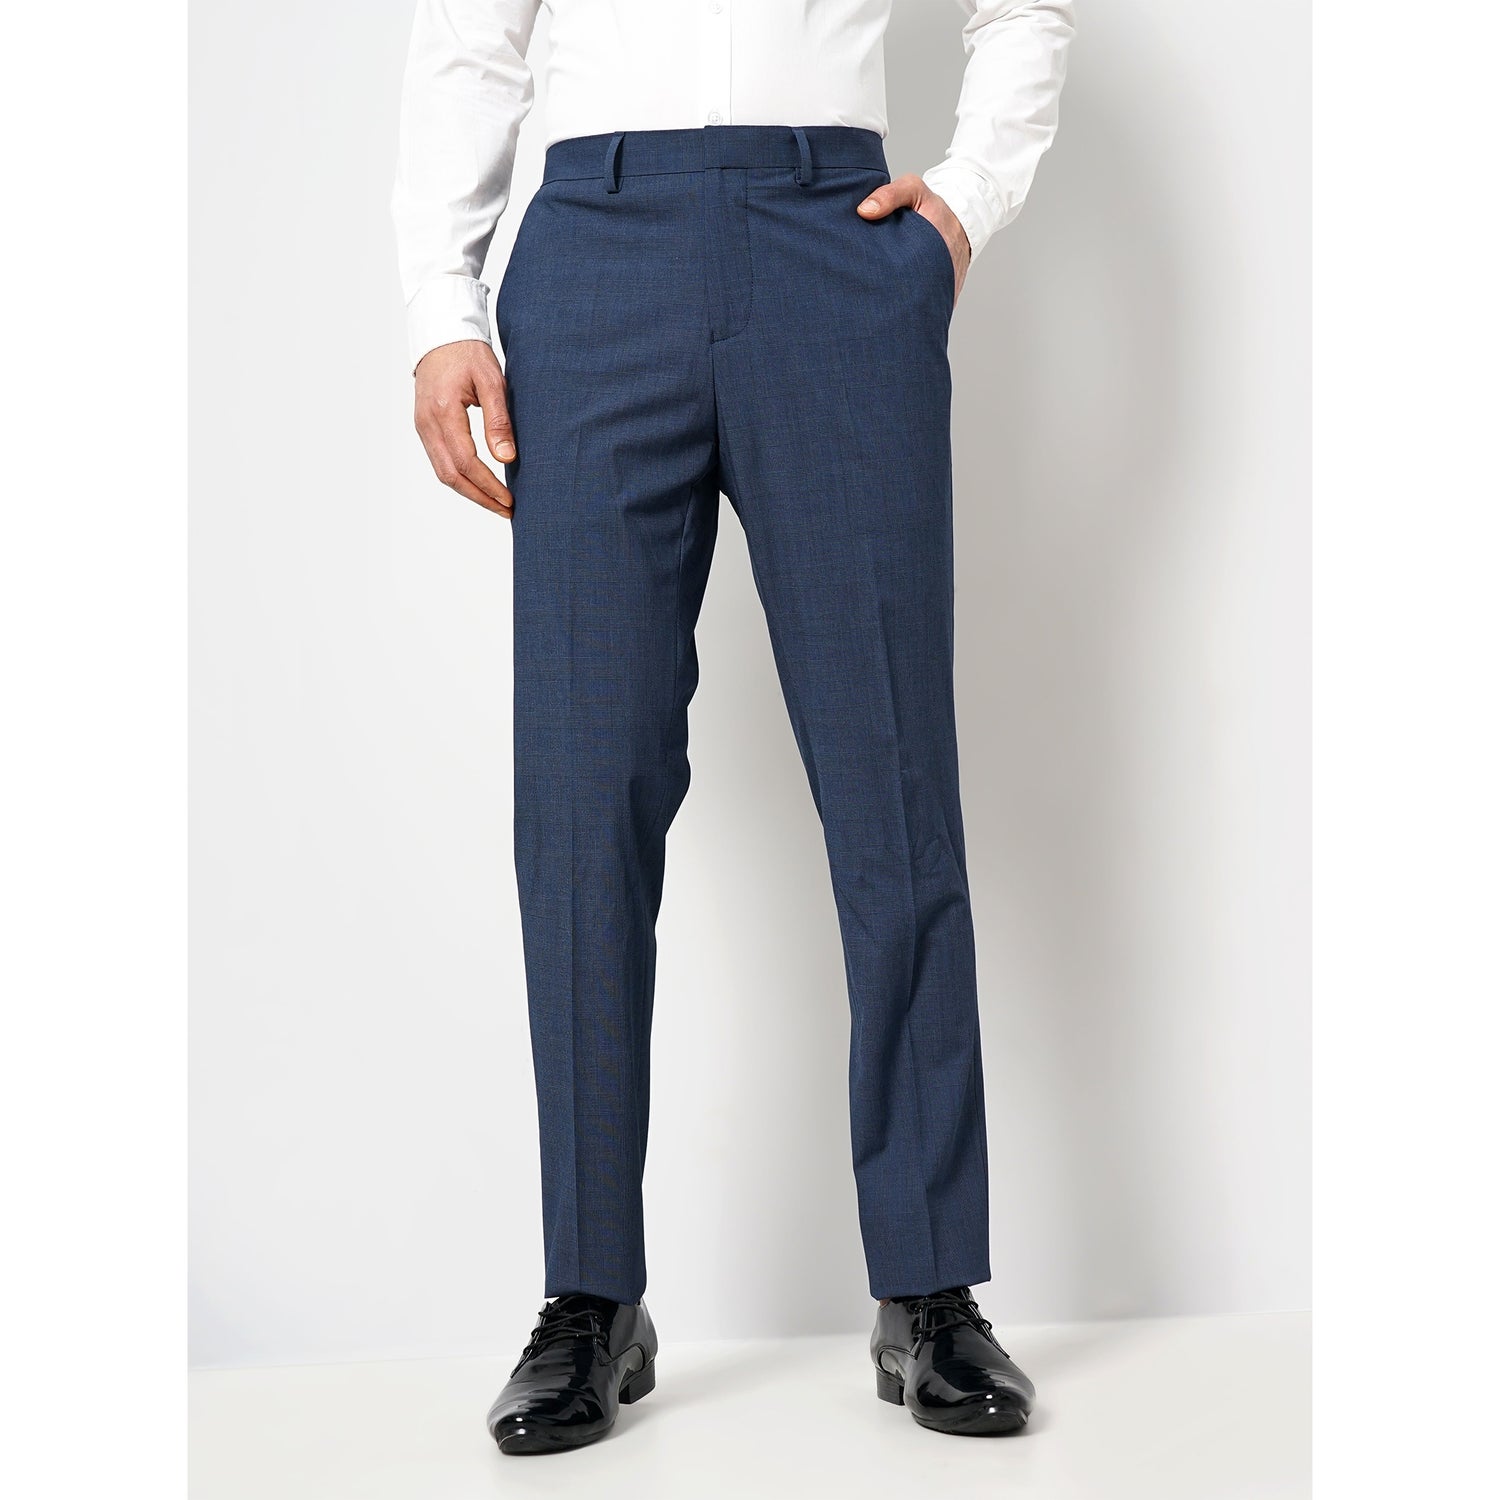 Men's Navy Blue Solid Slim Fit Polyester Suits Pants (GOGABINFUN)